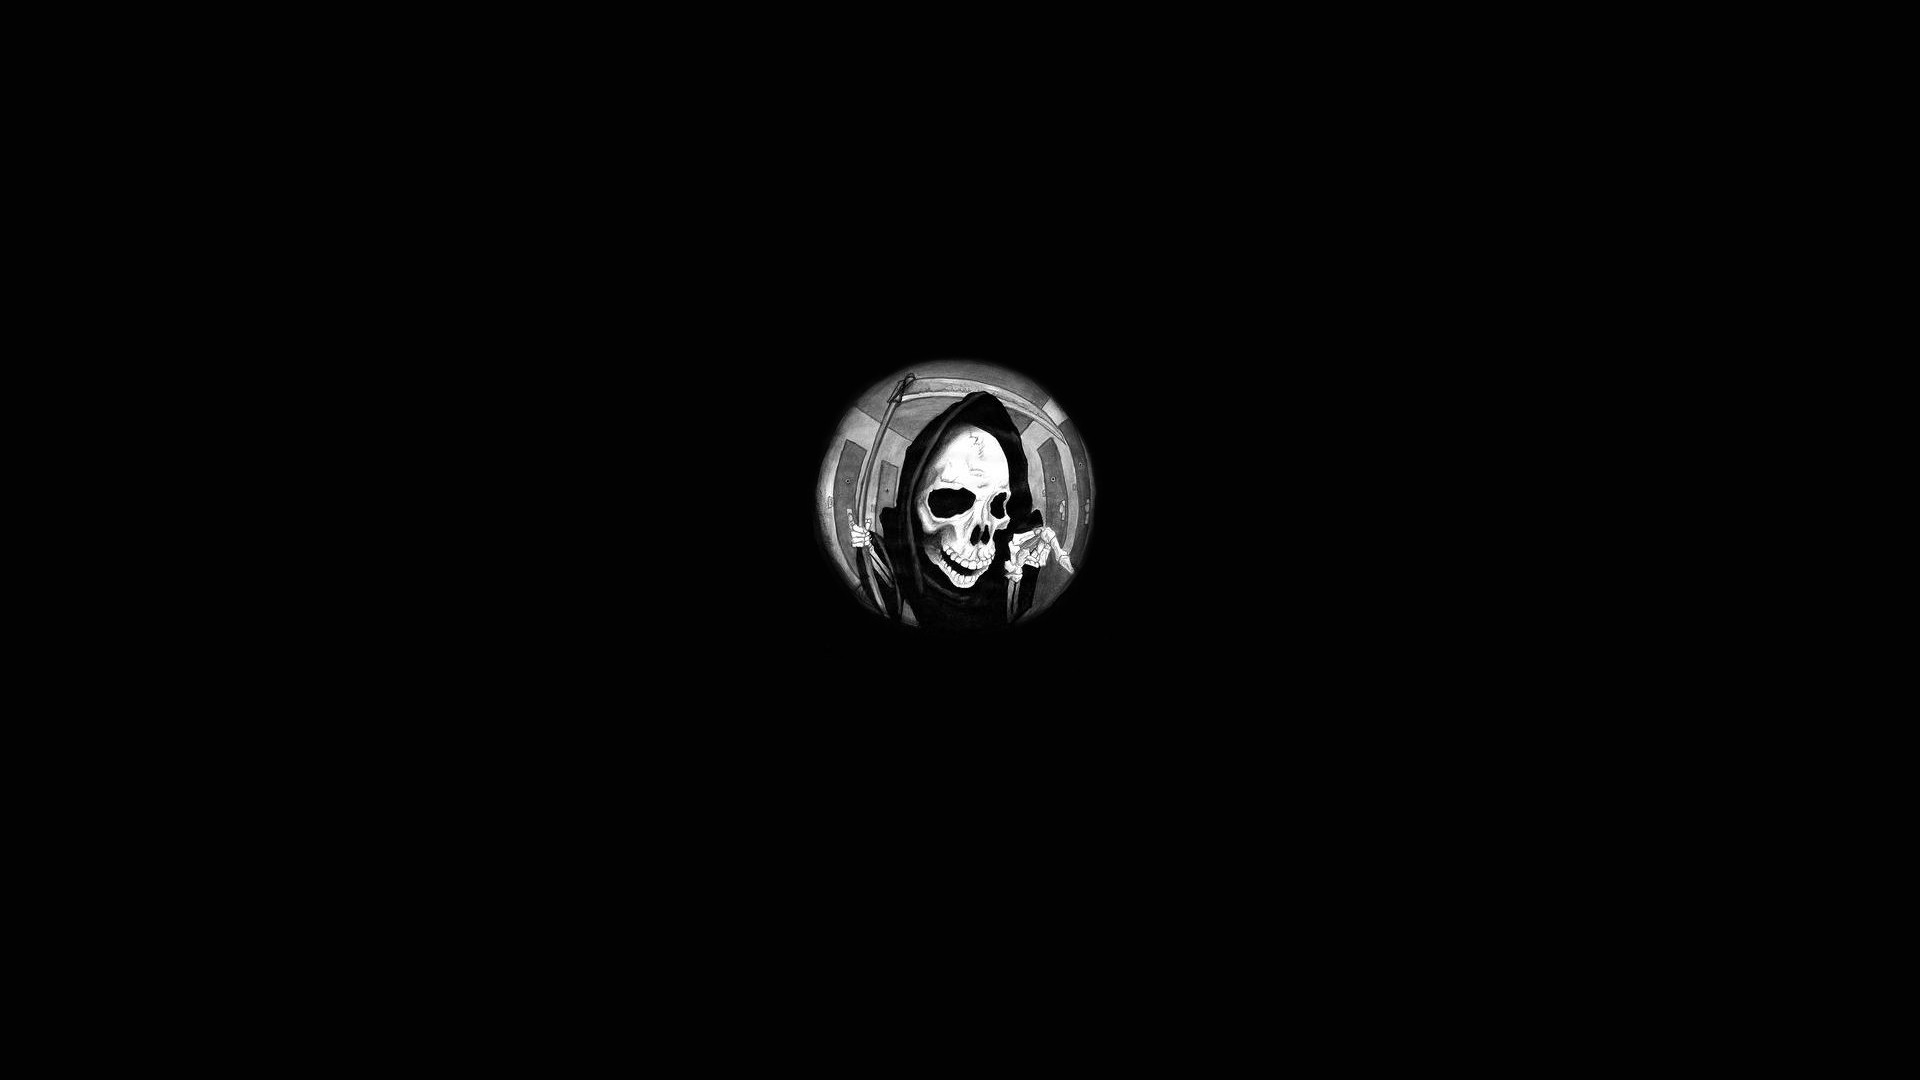 General 1920x1080 simple background minimalism Grim Reaper bones hallway door fisheye lens monochrome drawing black background spooky death